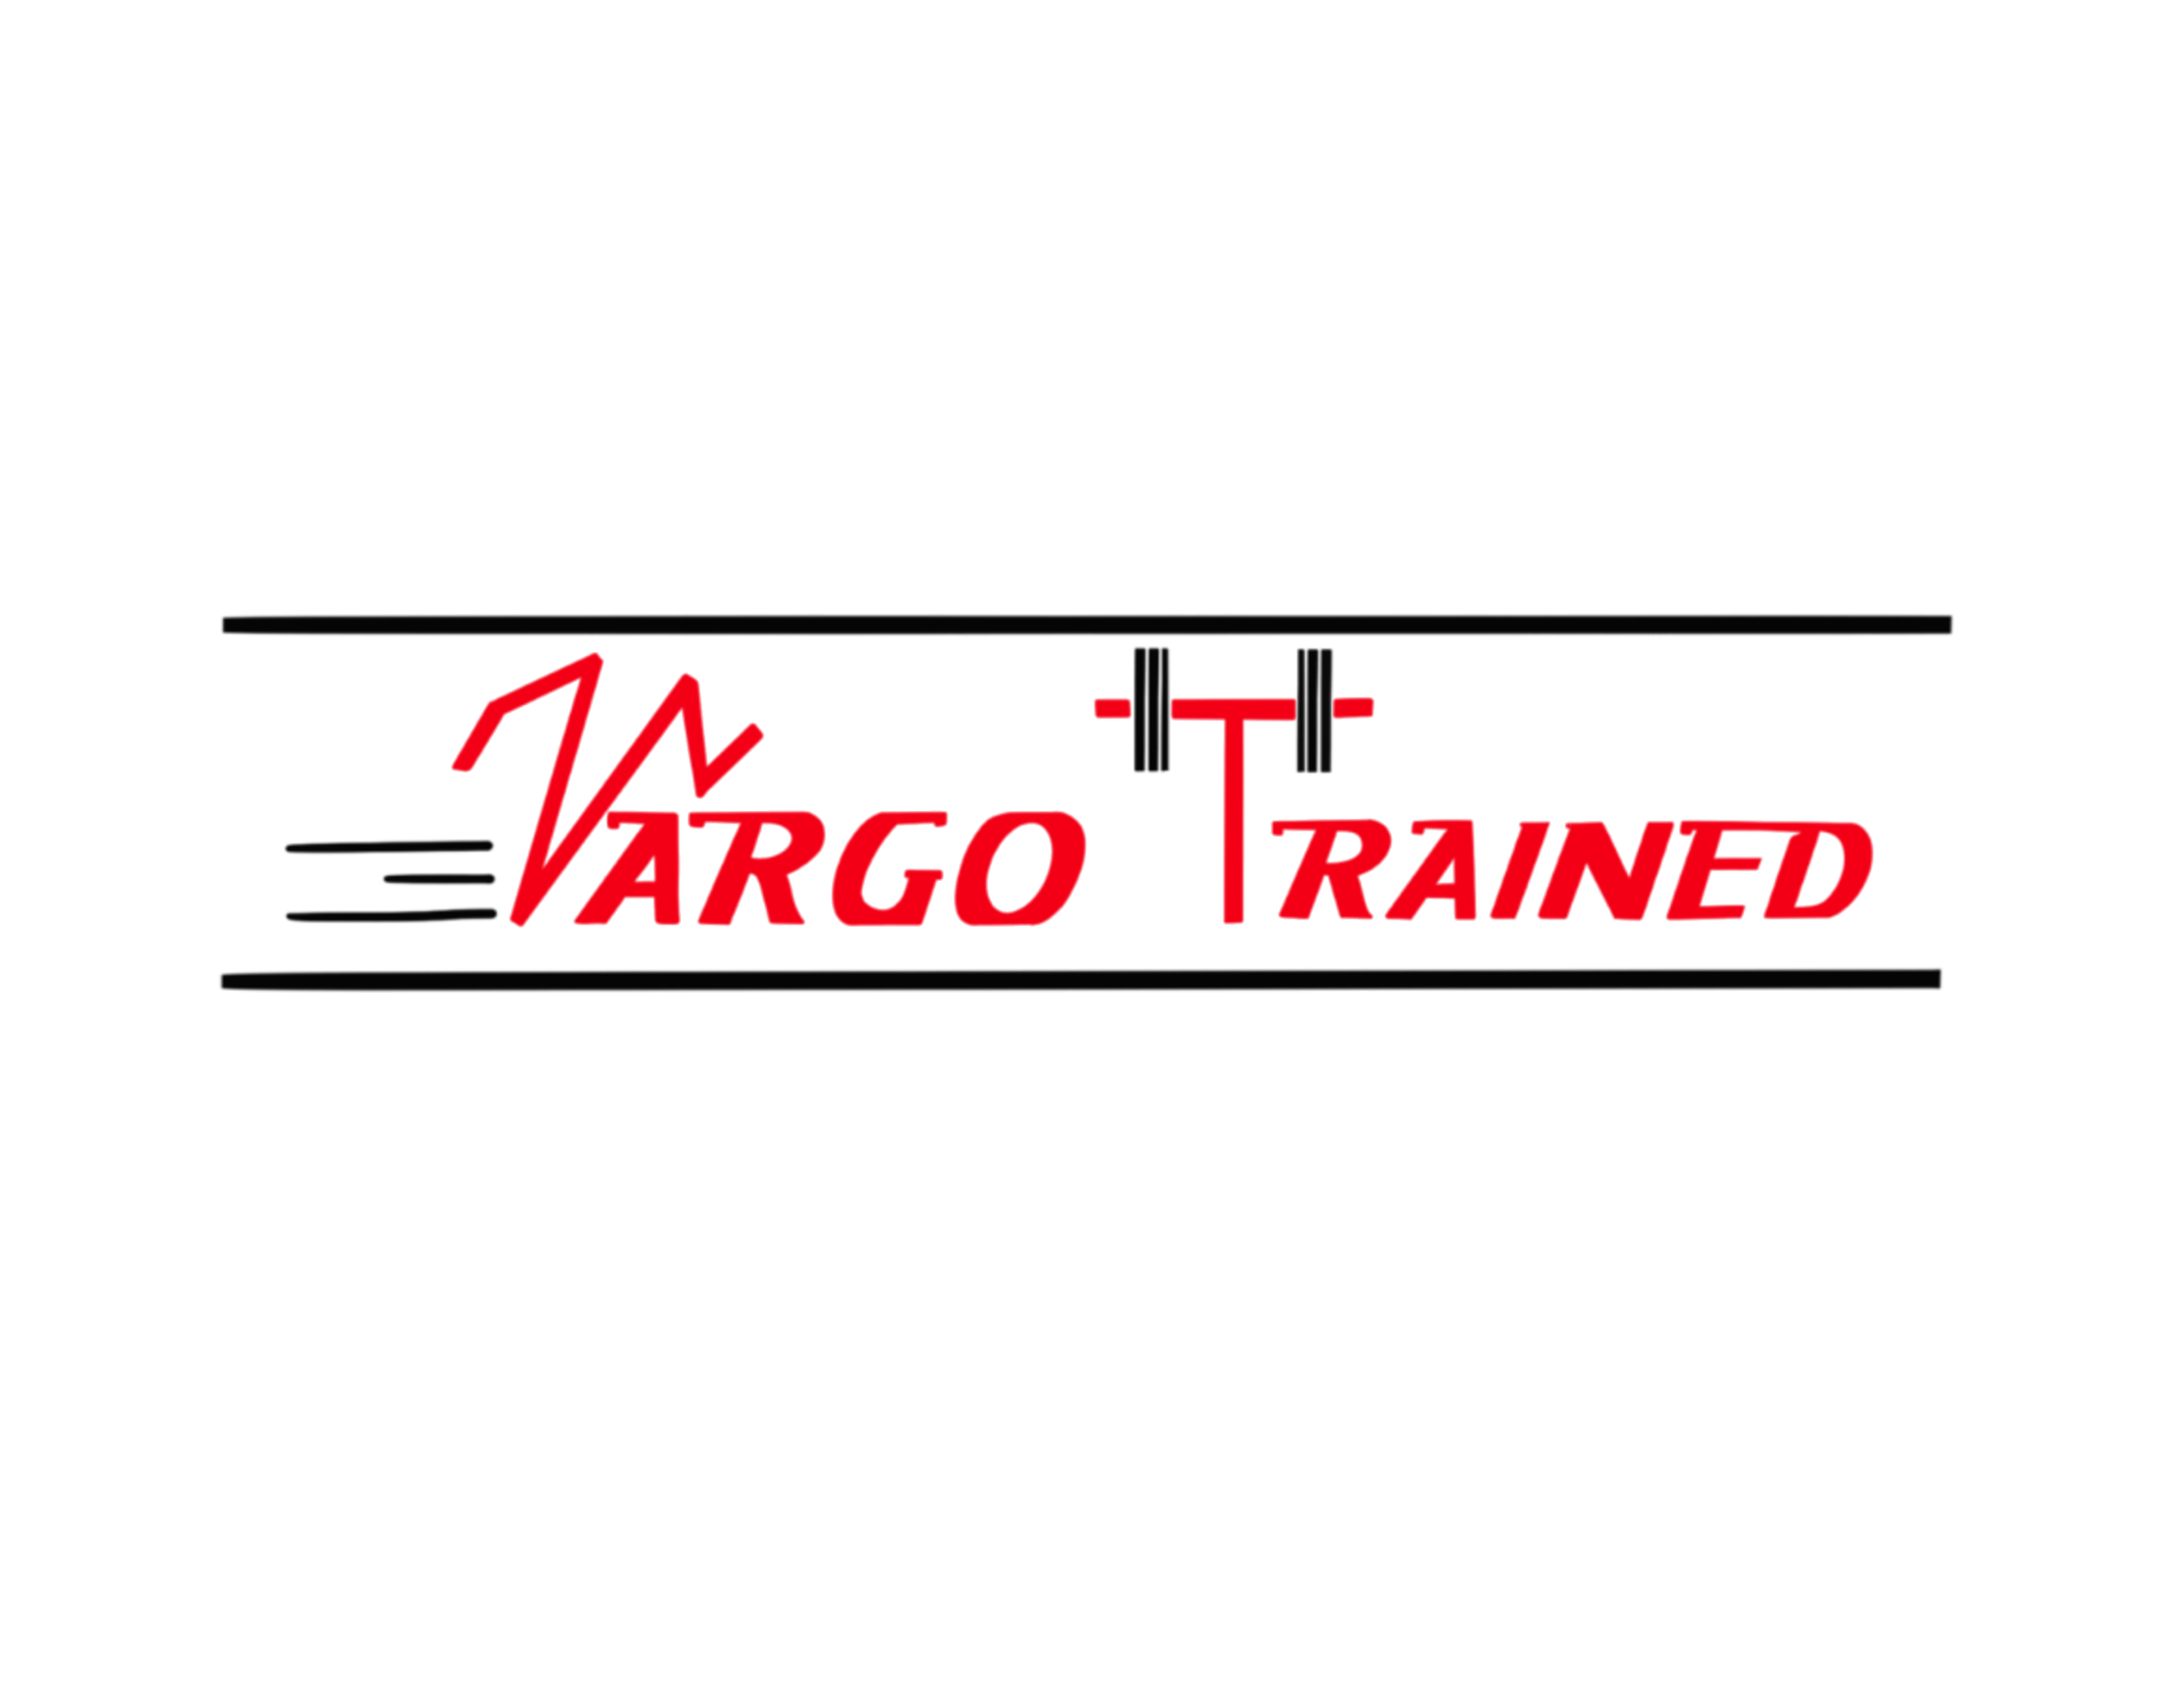 Vargo Trained logo